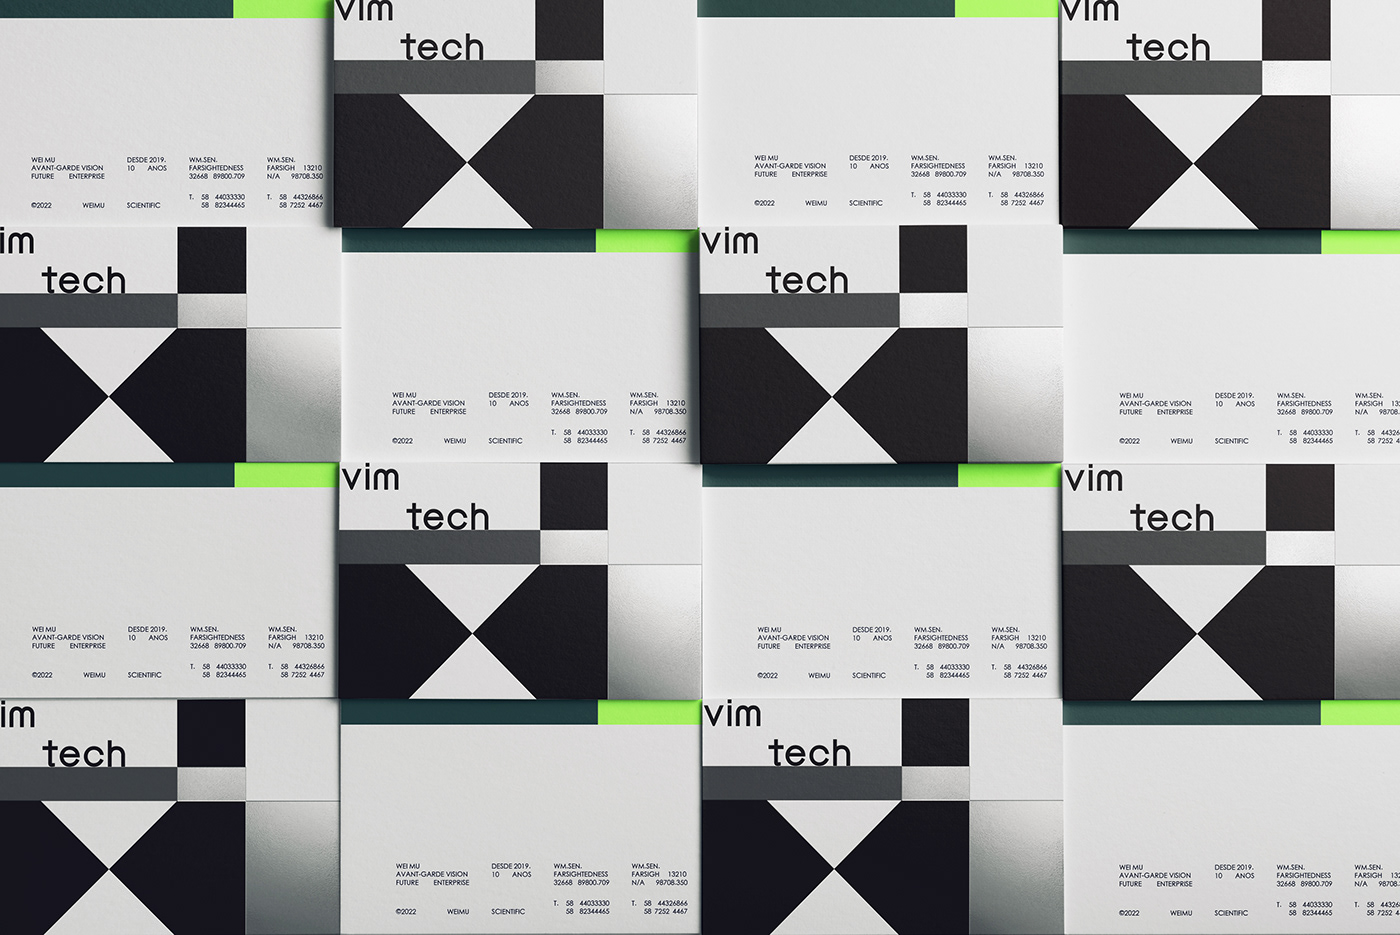 Vim Tech品牌视觉形象设计